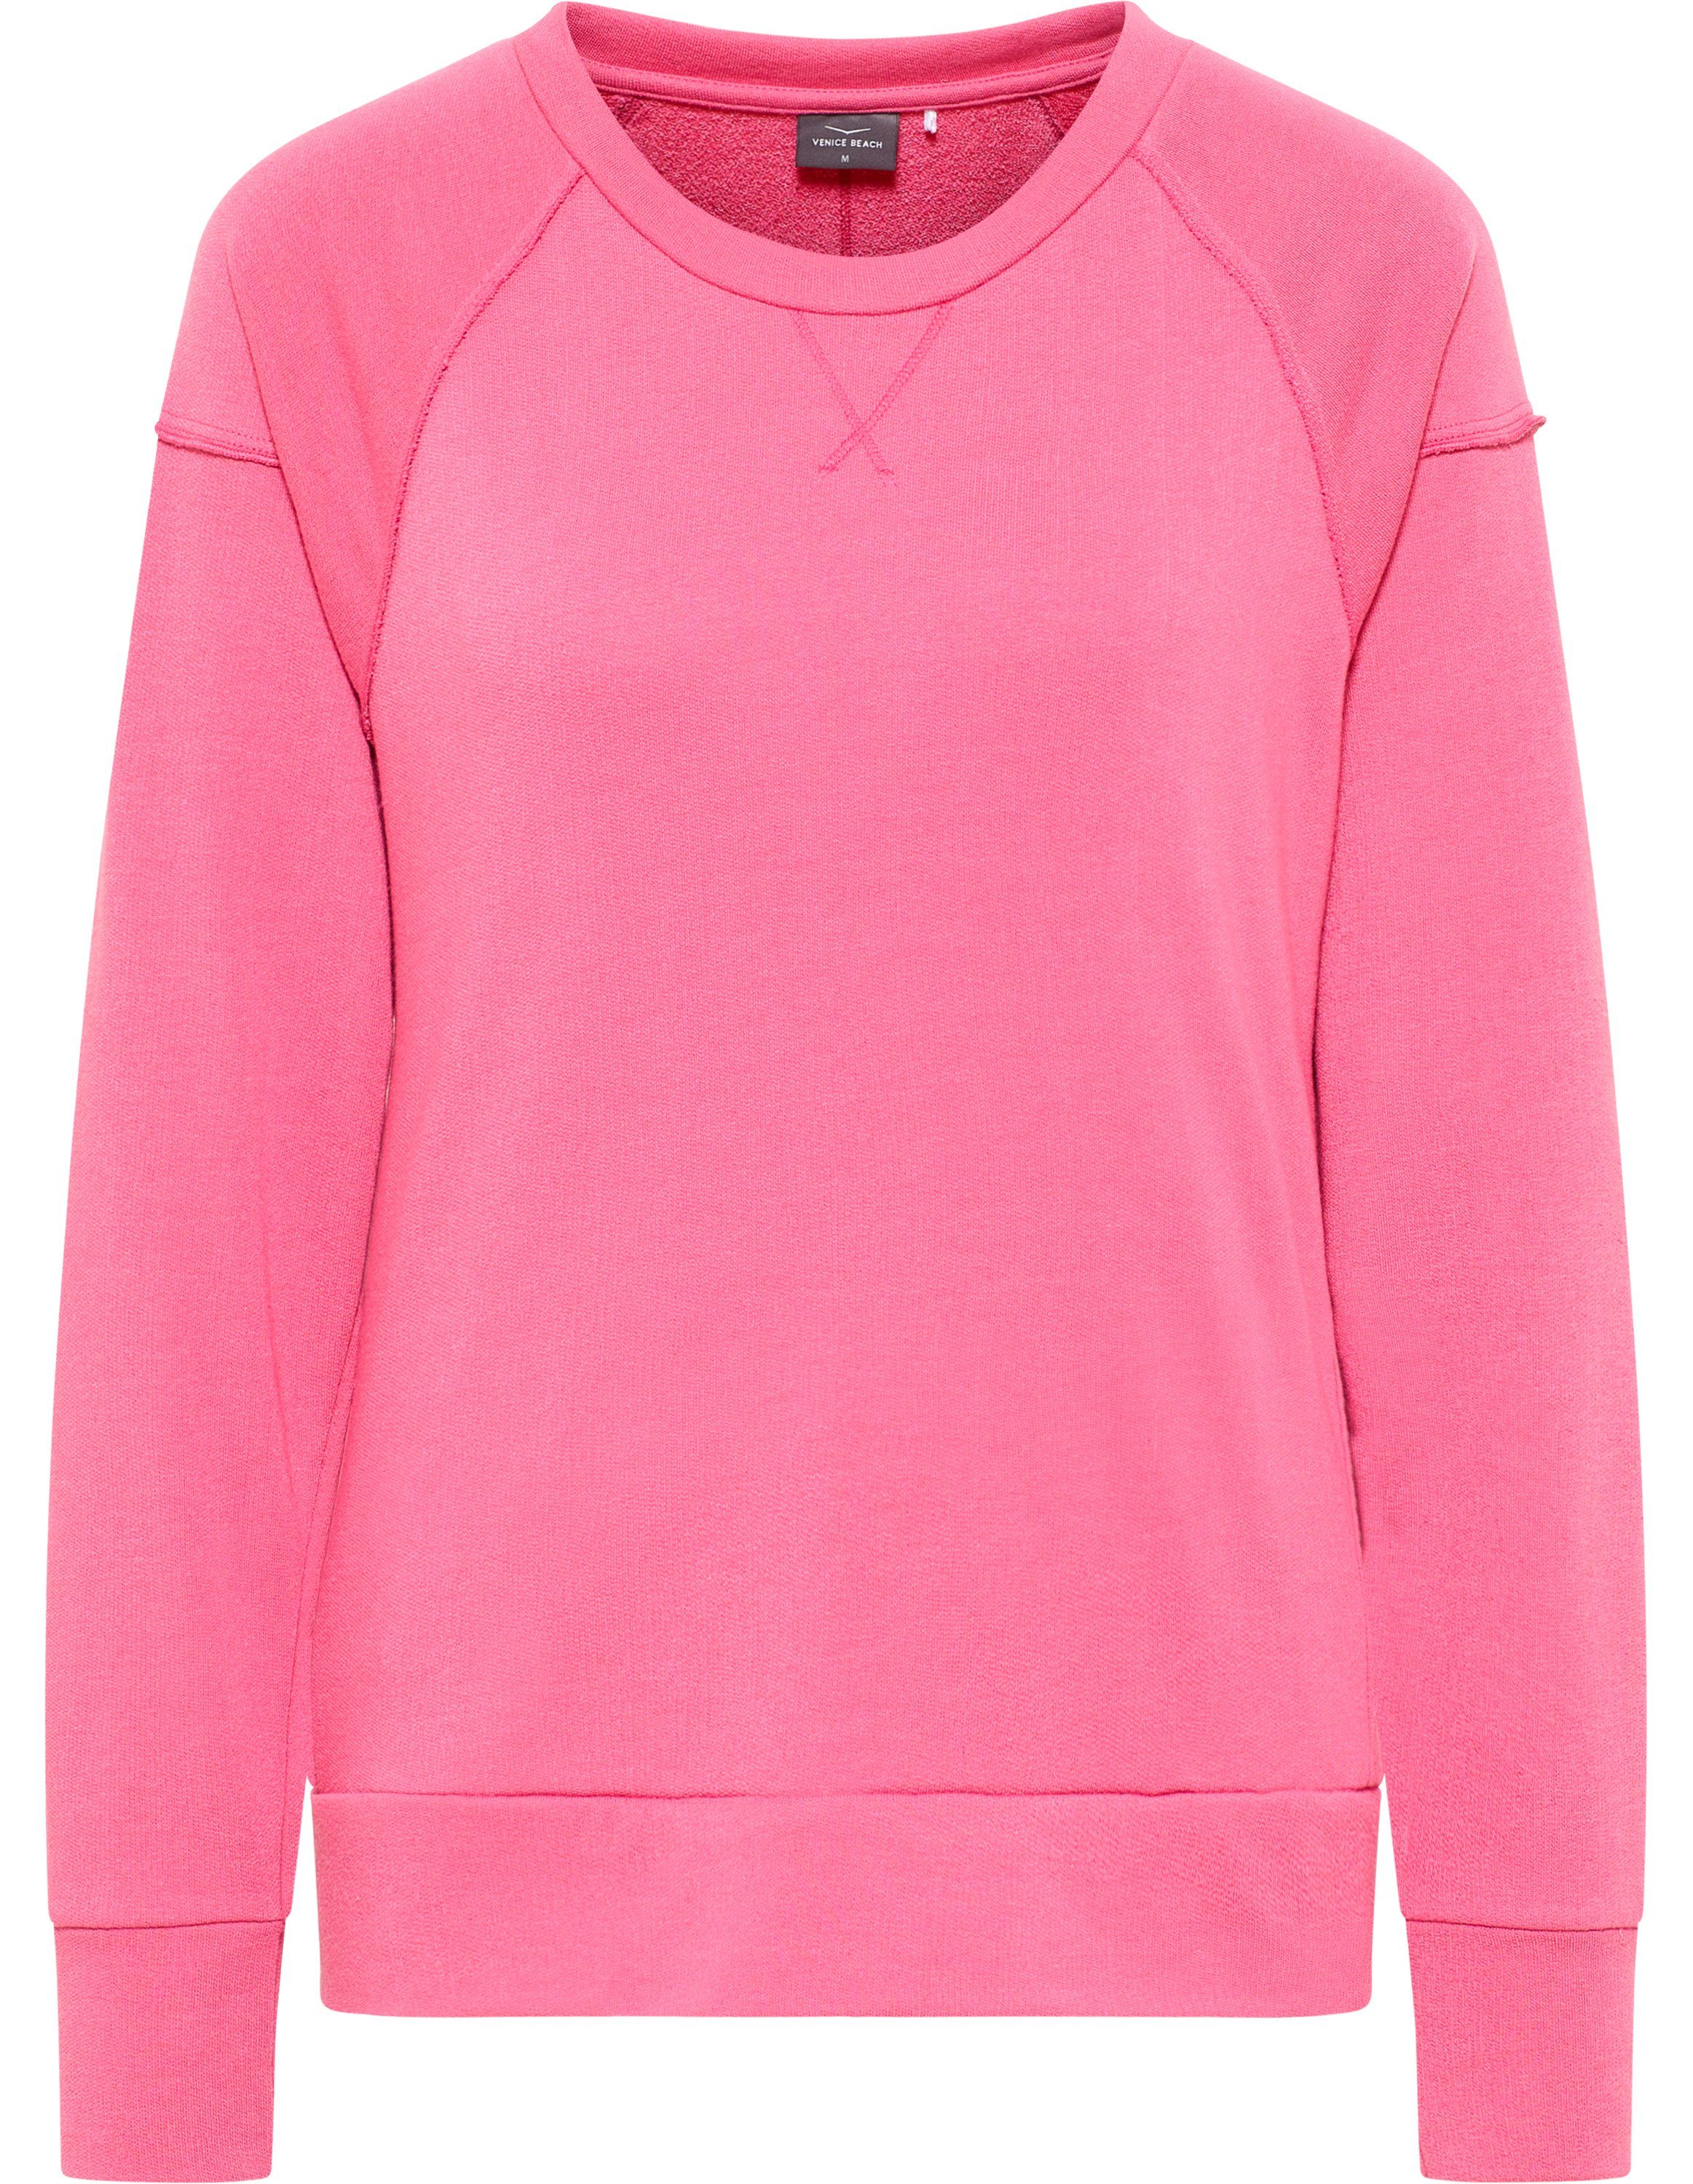 Venice Beach Sweatshirt Sweatshirt VB FRANCIE pink sky